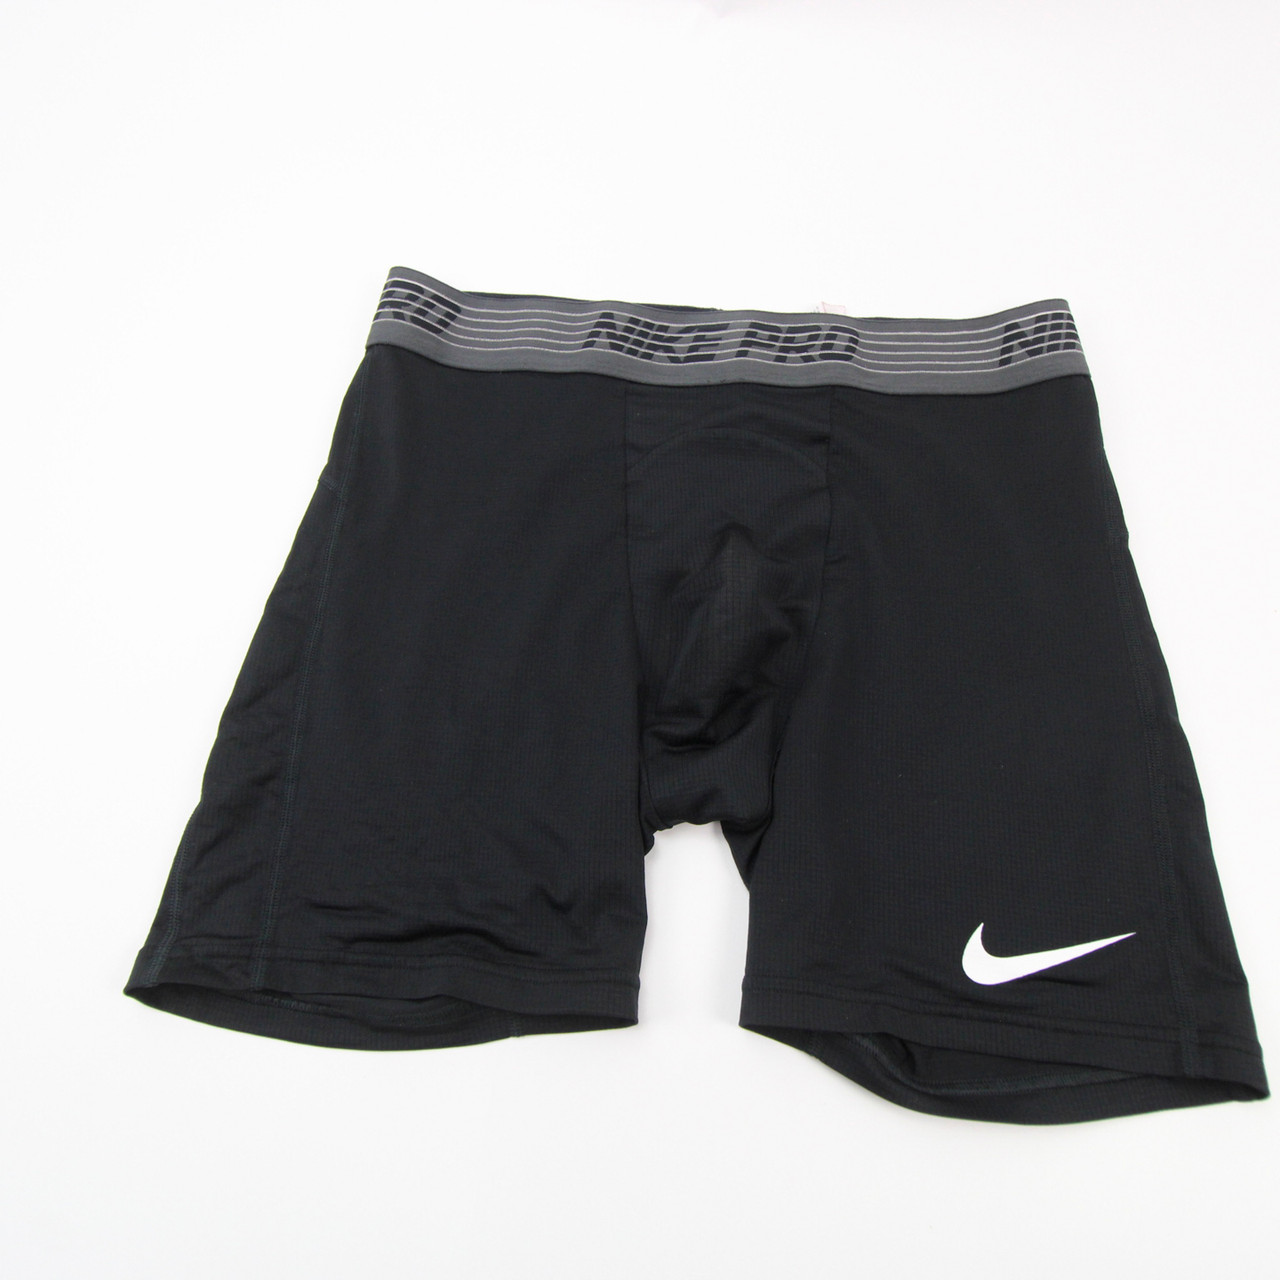 Nike Pro Compression Pants Men's Black Used 3XL 37